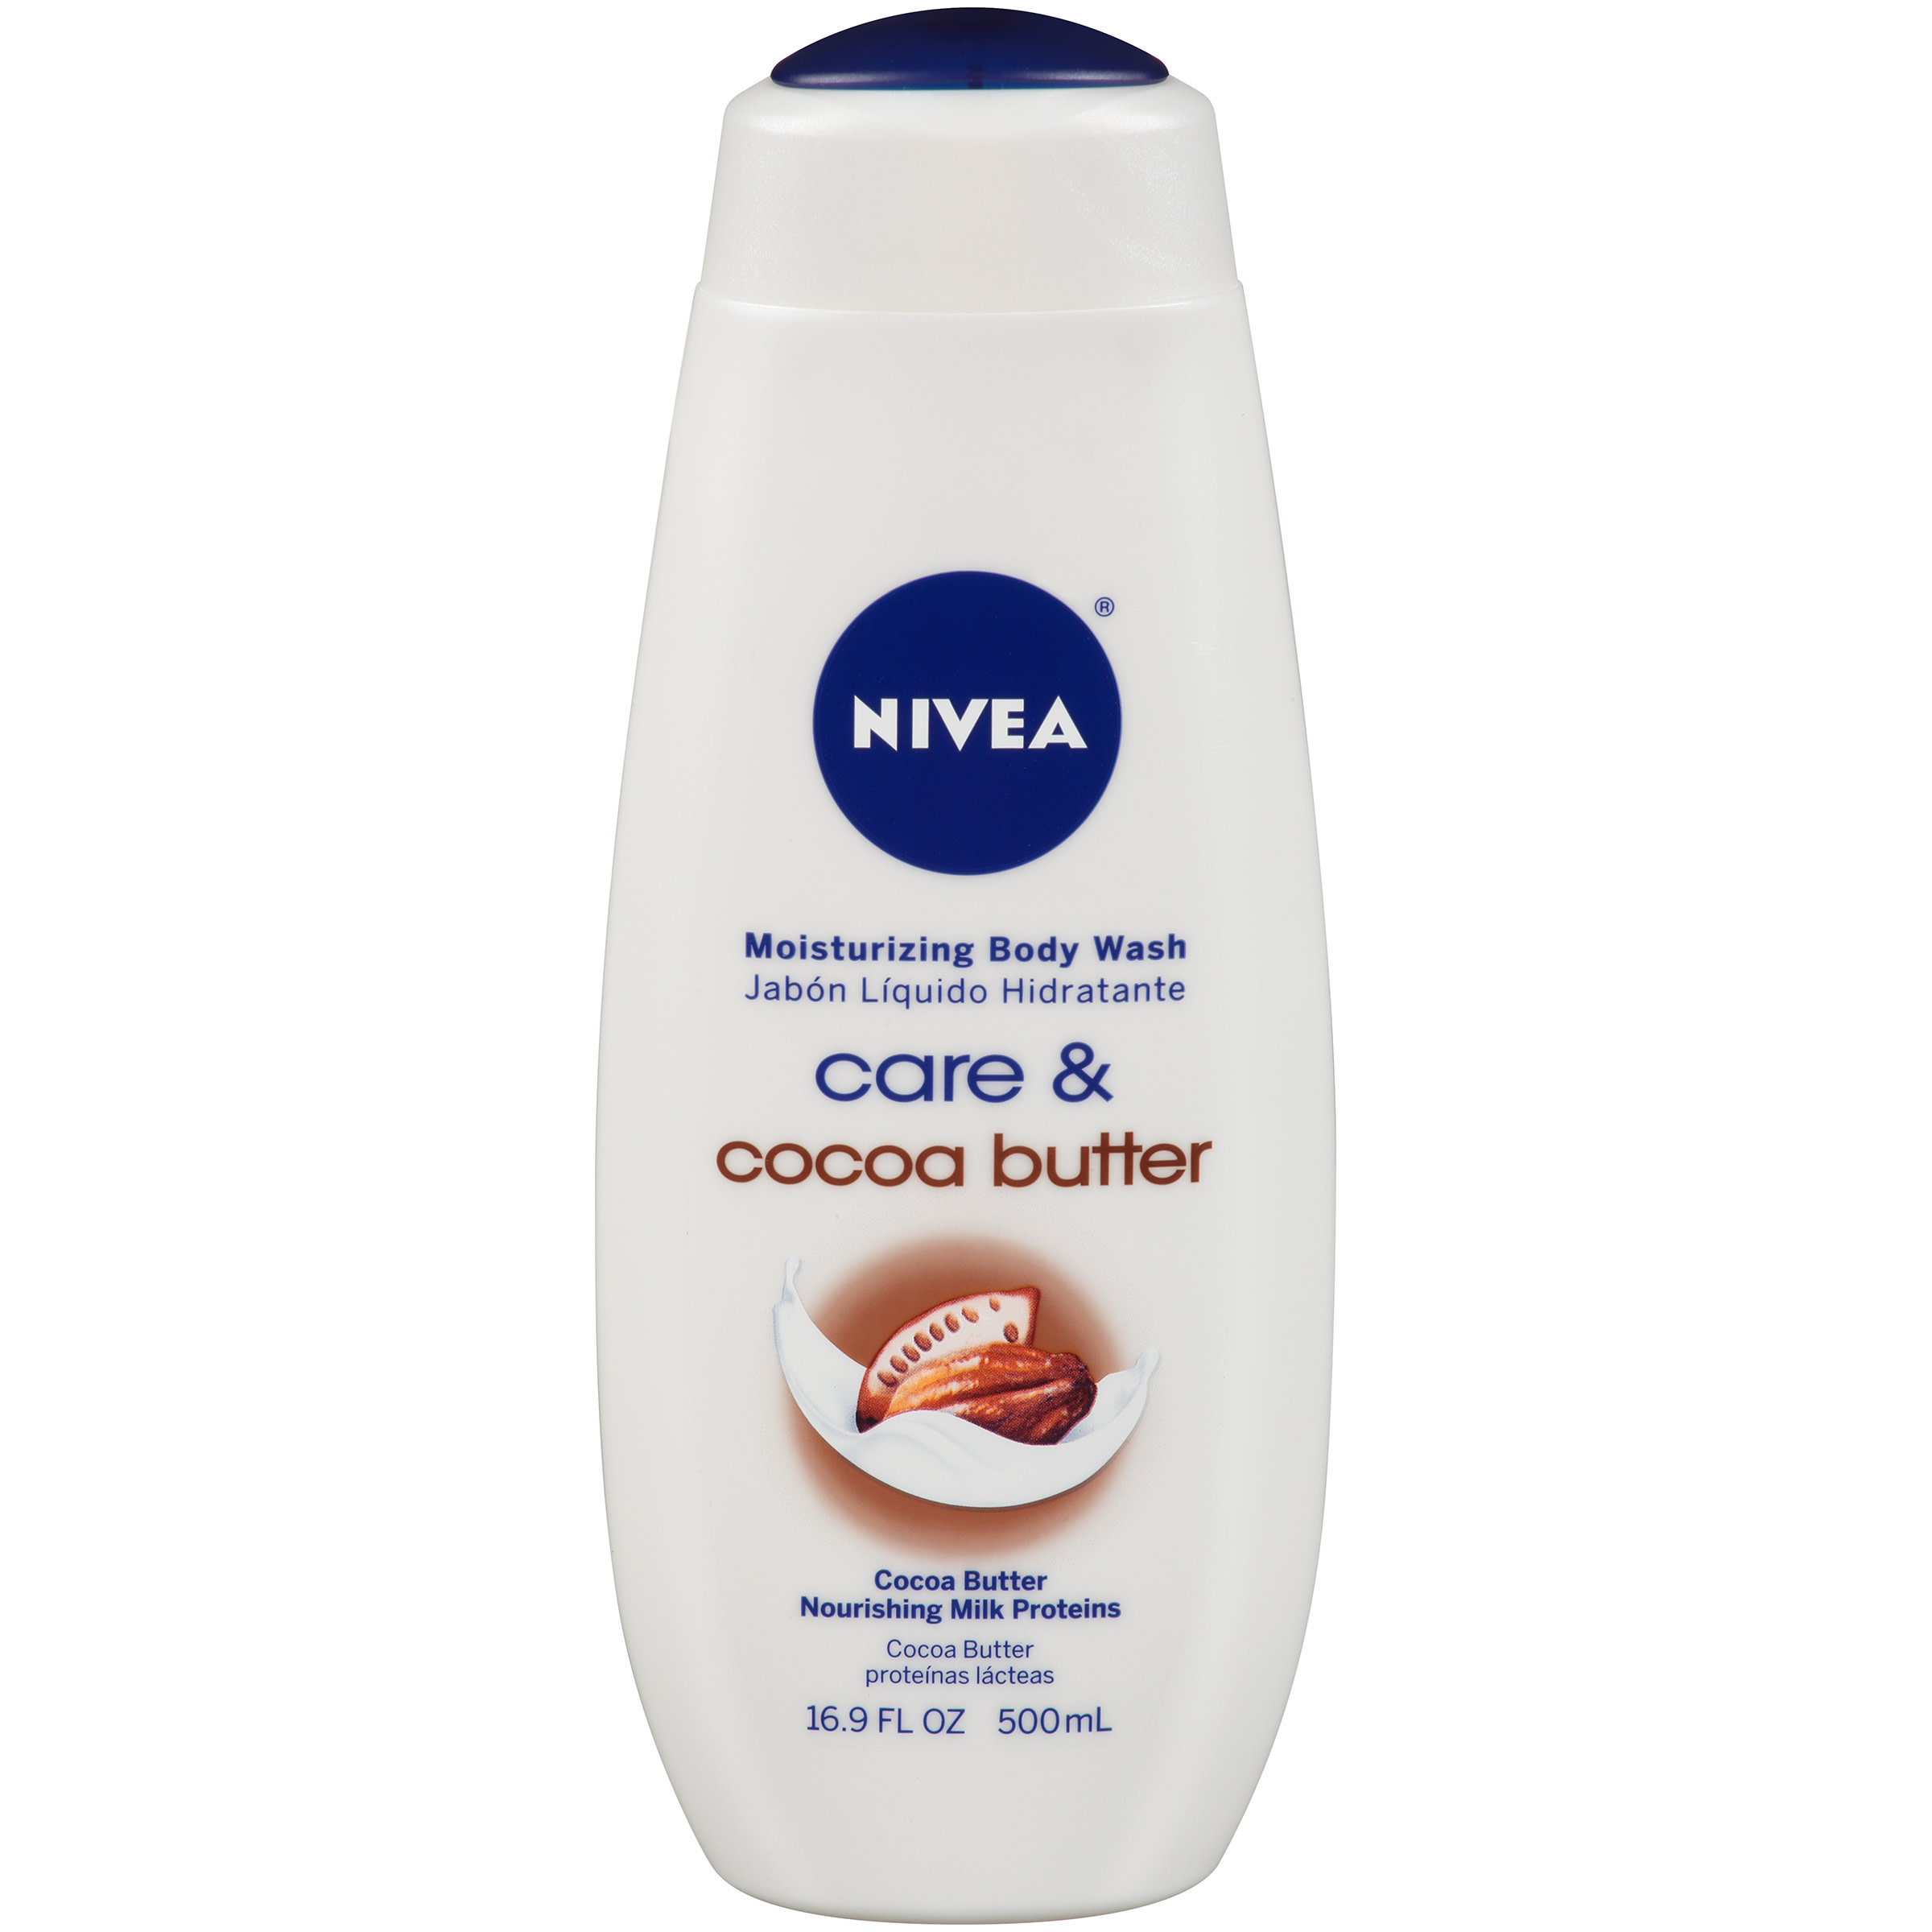 NIVEA Care and Cocoa Butter Moisturizing Body Wash 16.9 fl. oz. - image 1 of 2